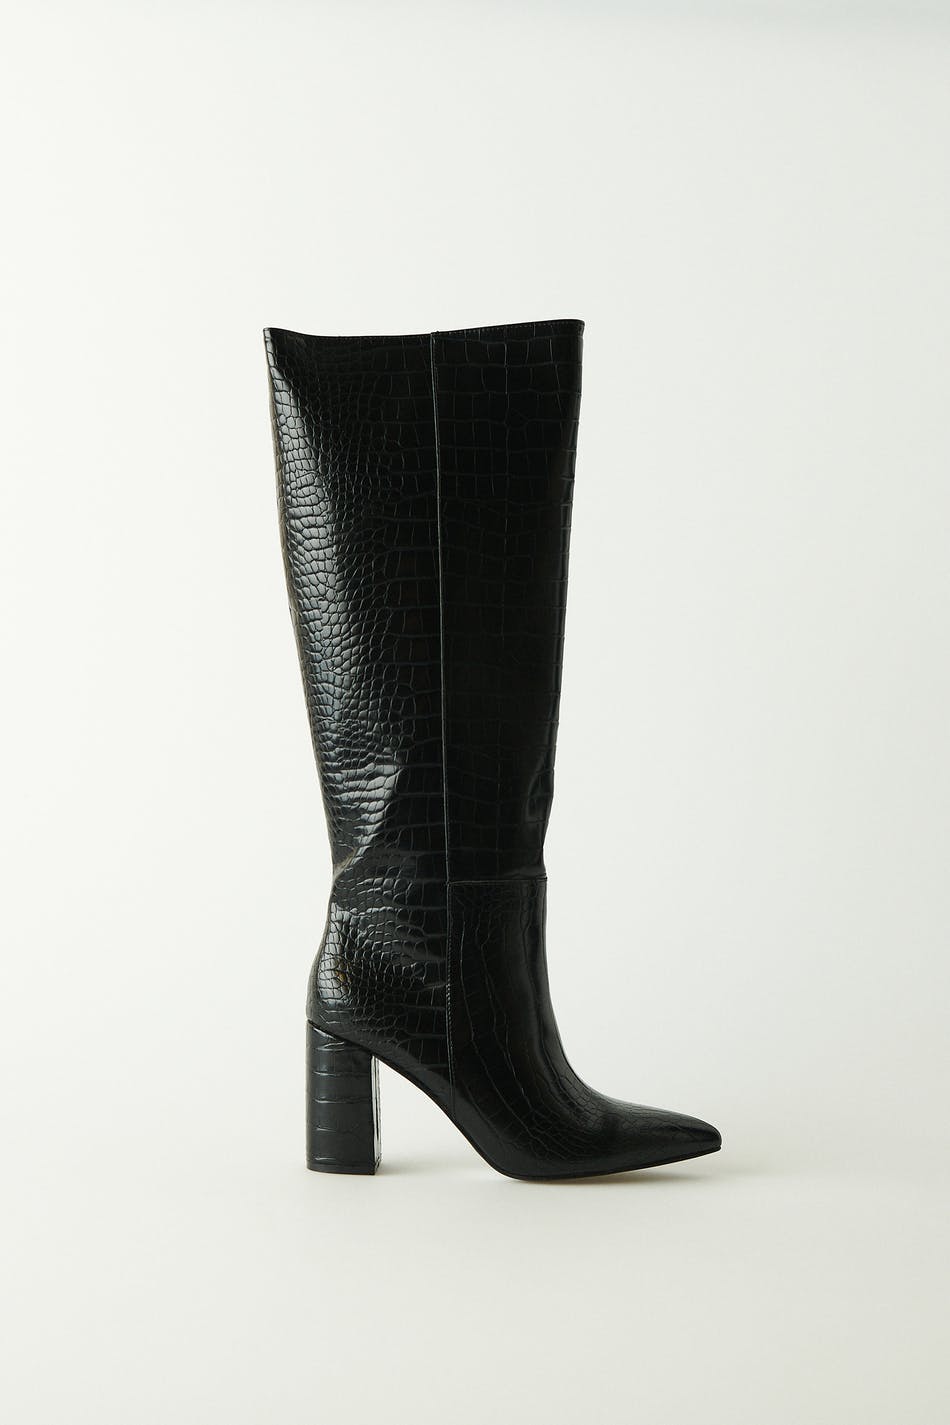 Lovisa high heel boots